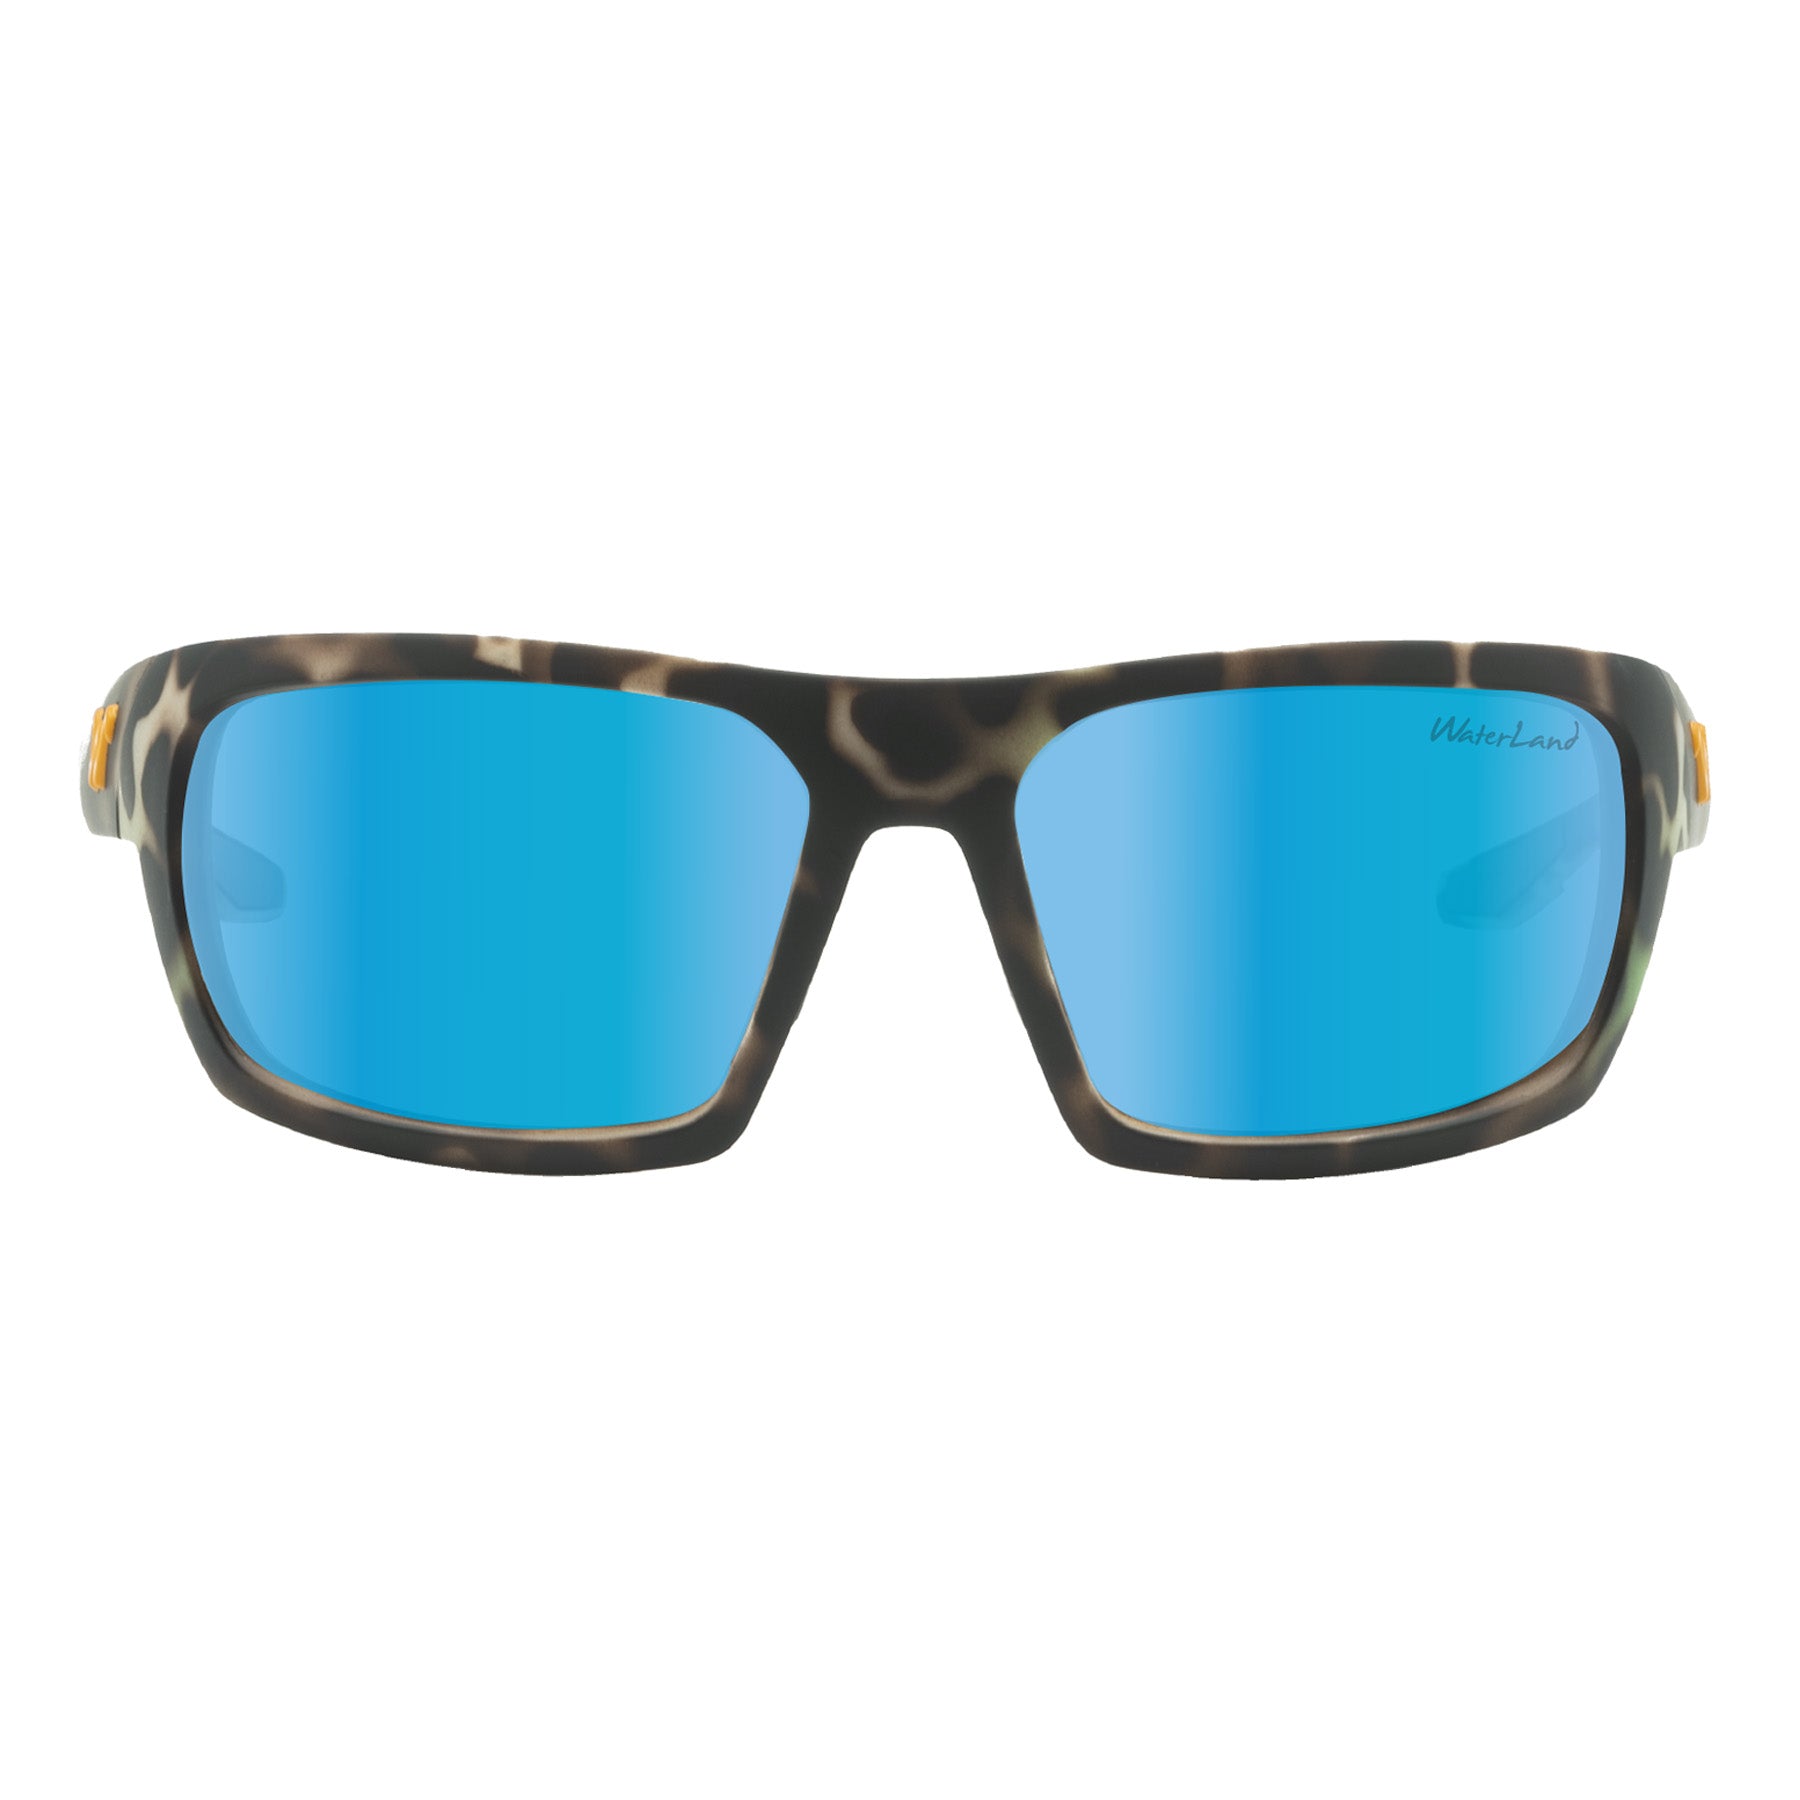 Waterland Fishing Sunglasses Milliken / Black / Green Mirror Glass